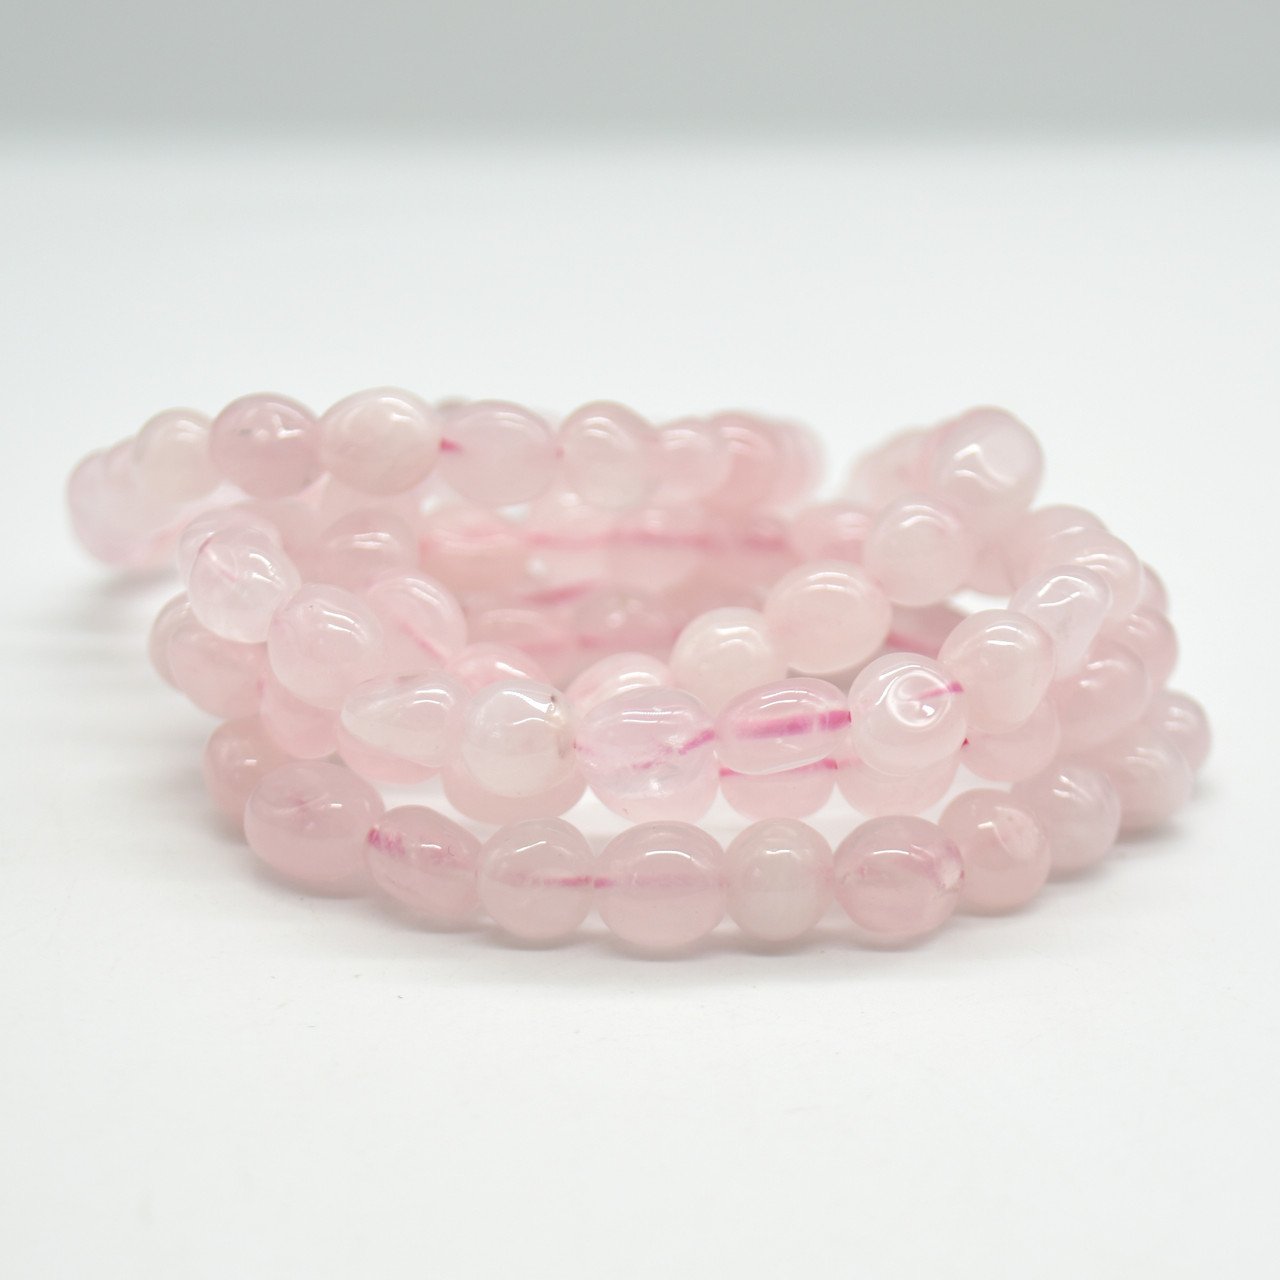 Natural Rose Quartz Semi-precious Gemstone Pebble Nugget Beads Bracelet /  Sample Strand - 8mm - 10mm, 7.5